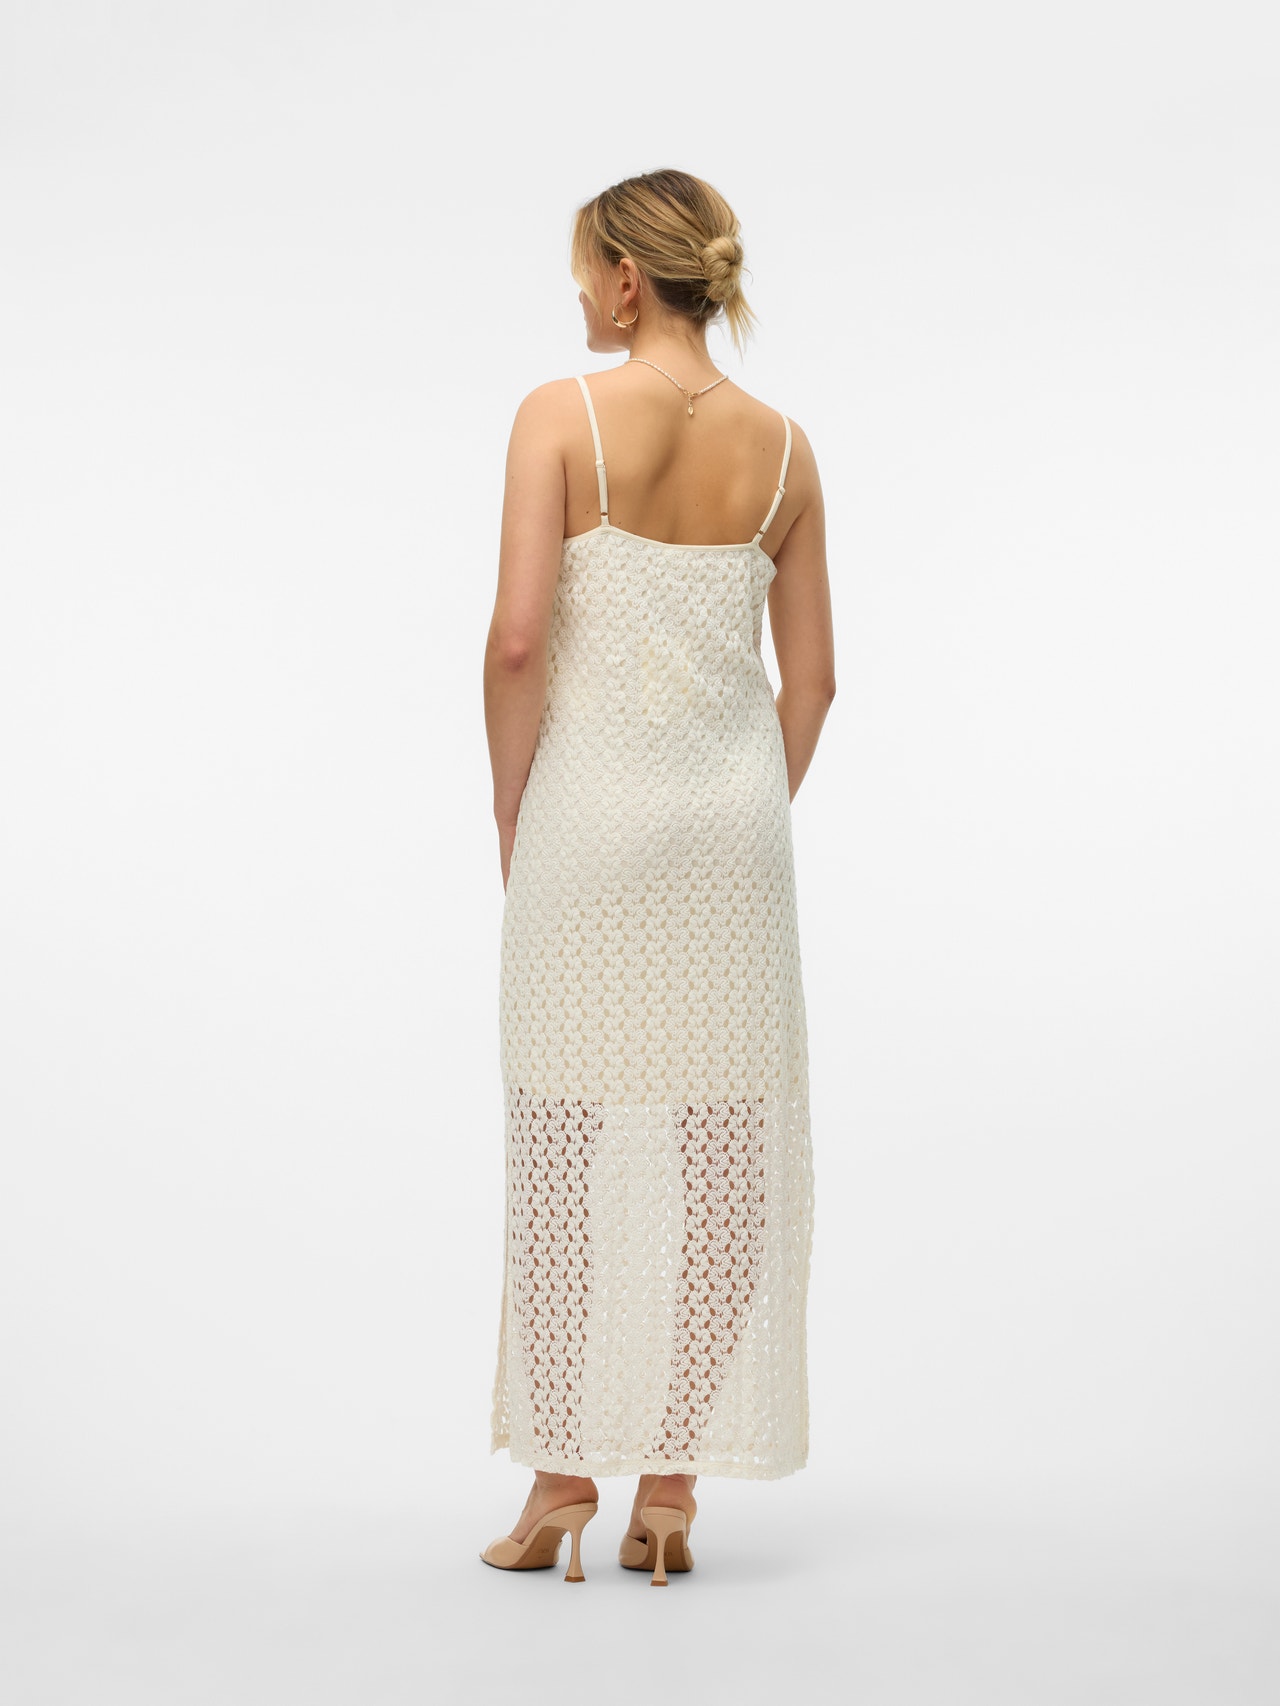 Vero Moda VMKYLIE Long dress -Birch - 10308005